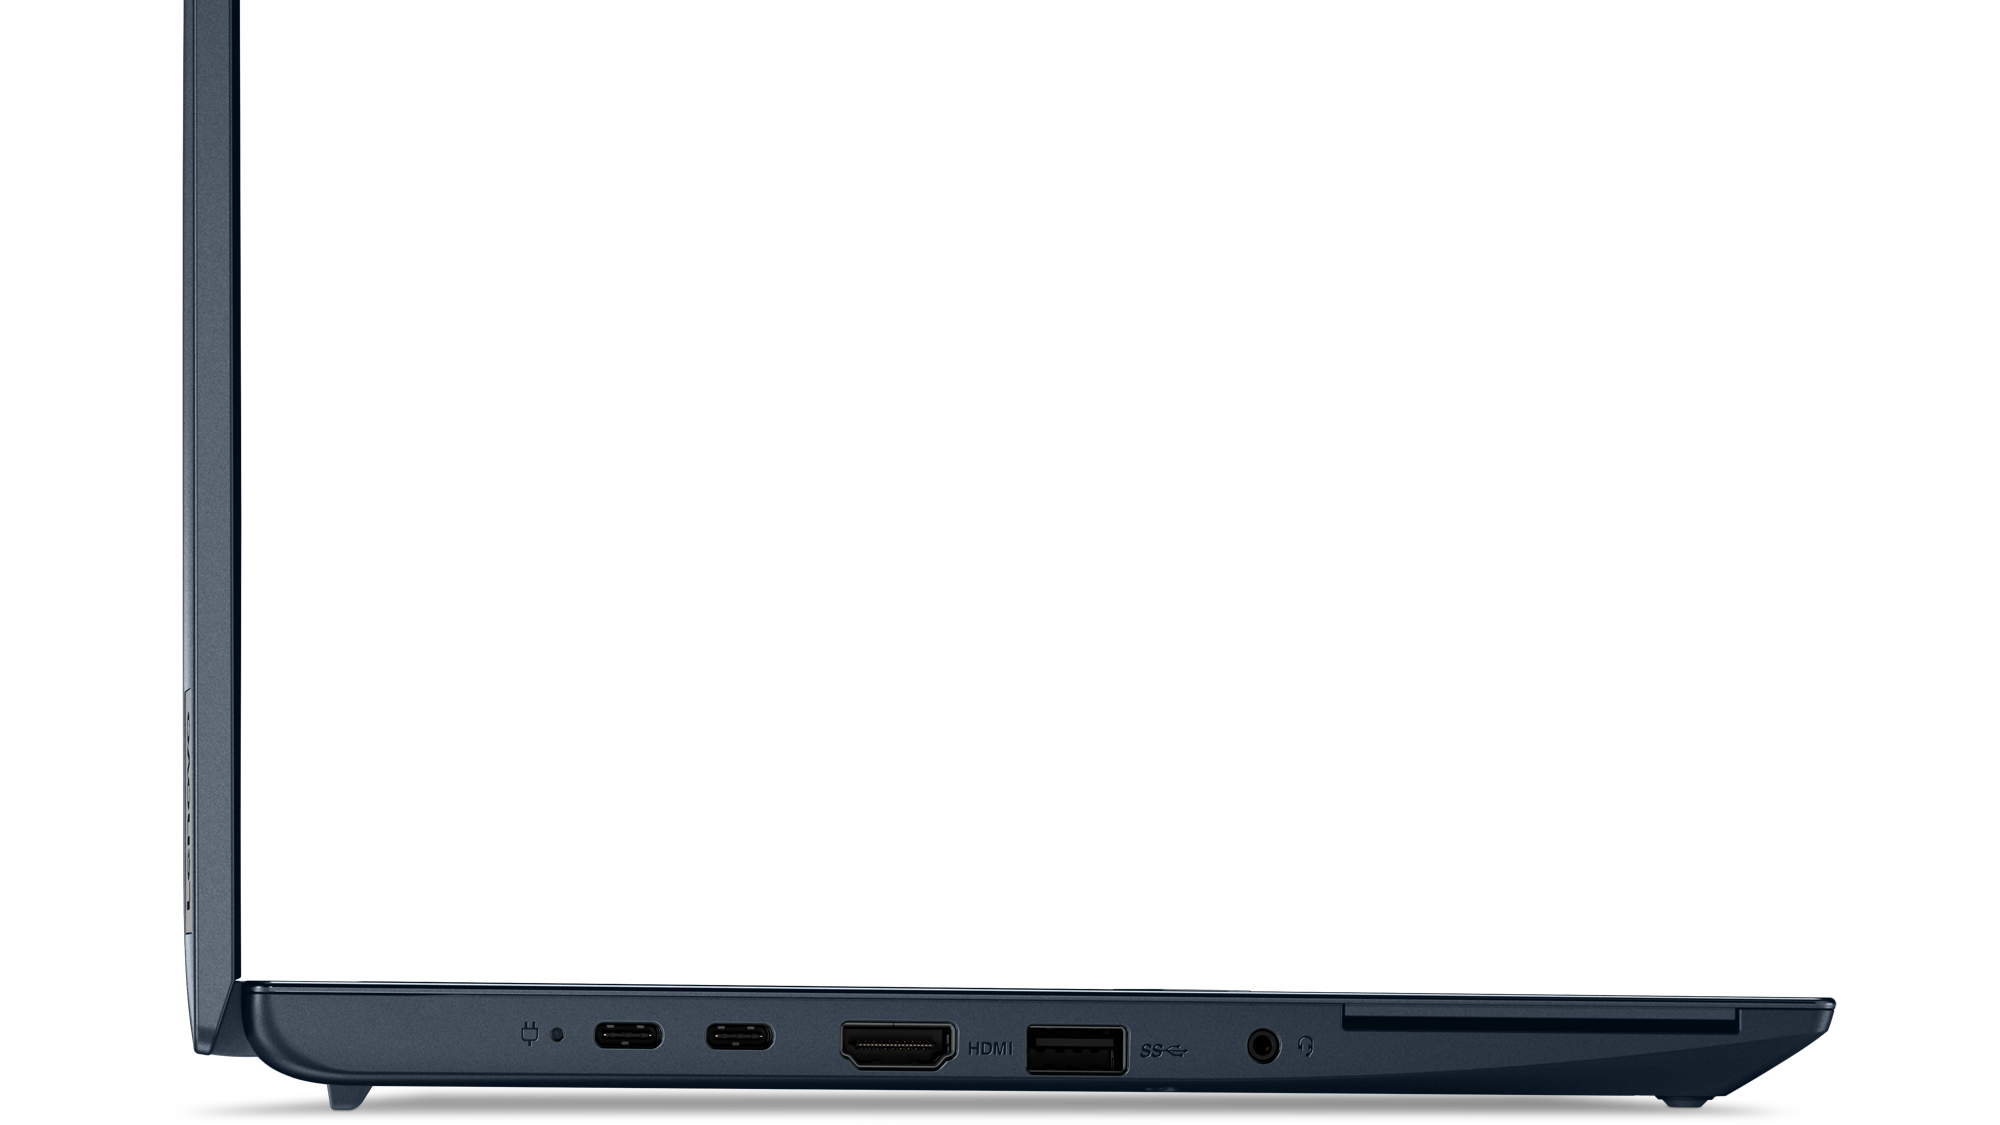 Lenovo ThinkPad C14 Chromebook (Image: Lenovo)